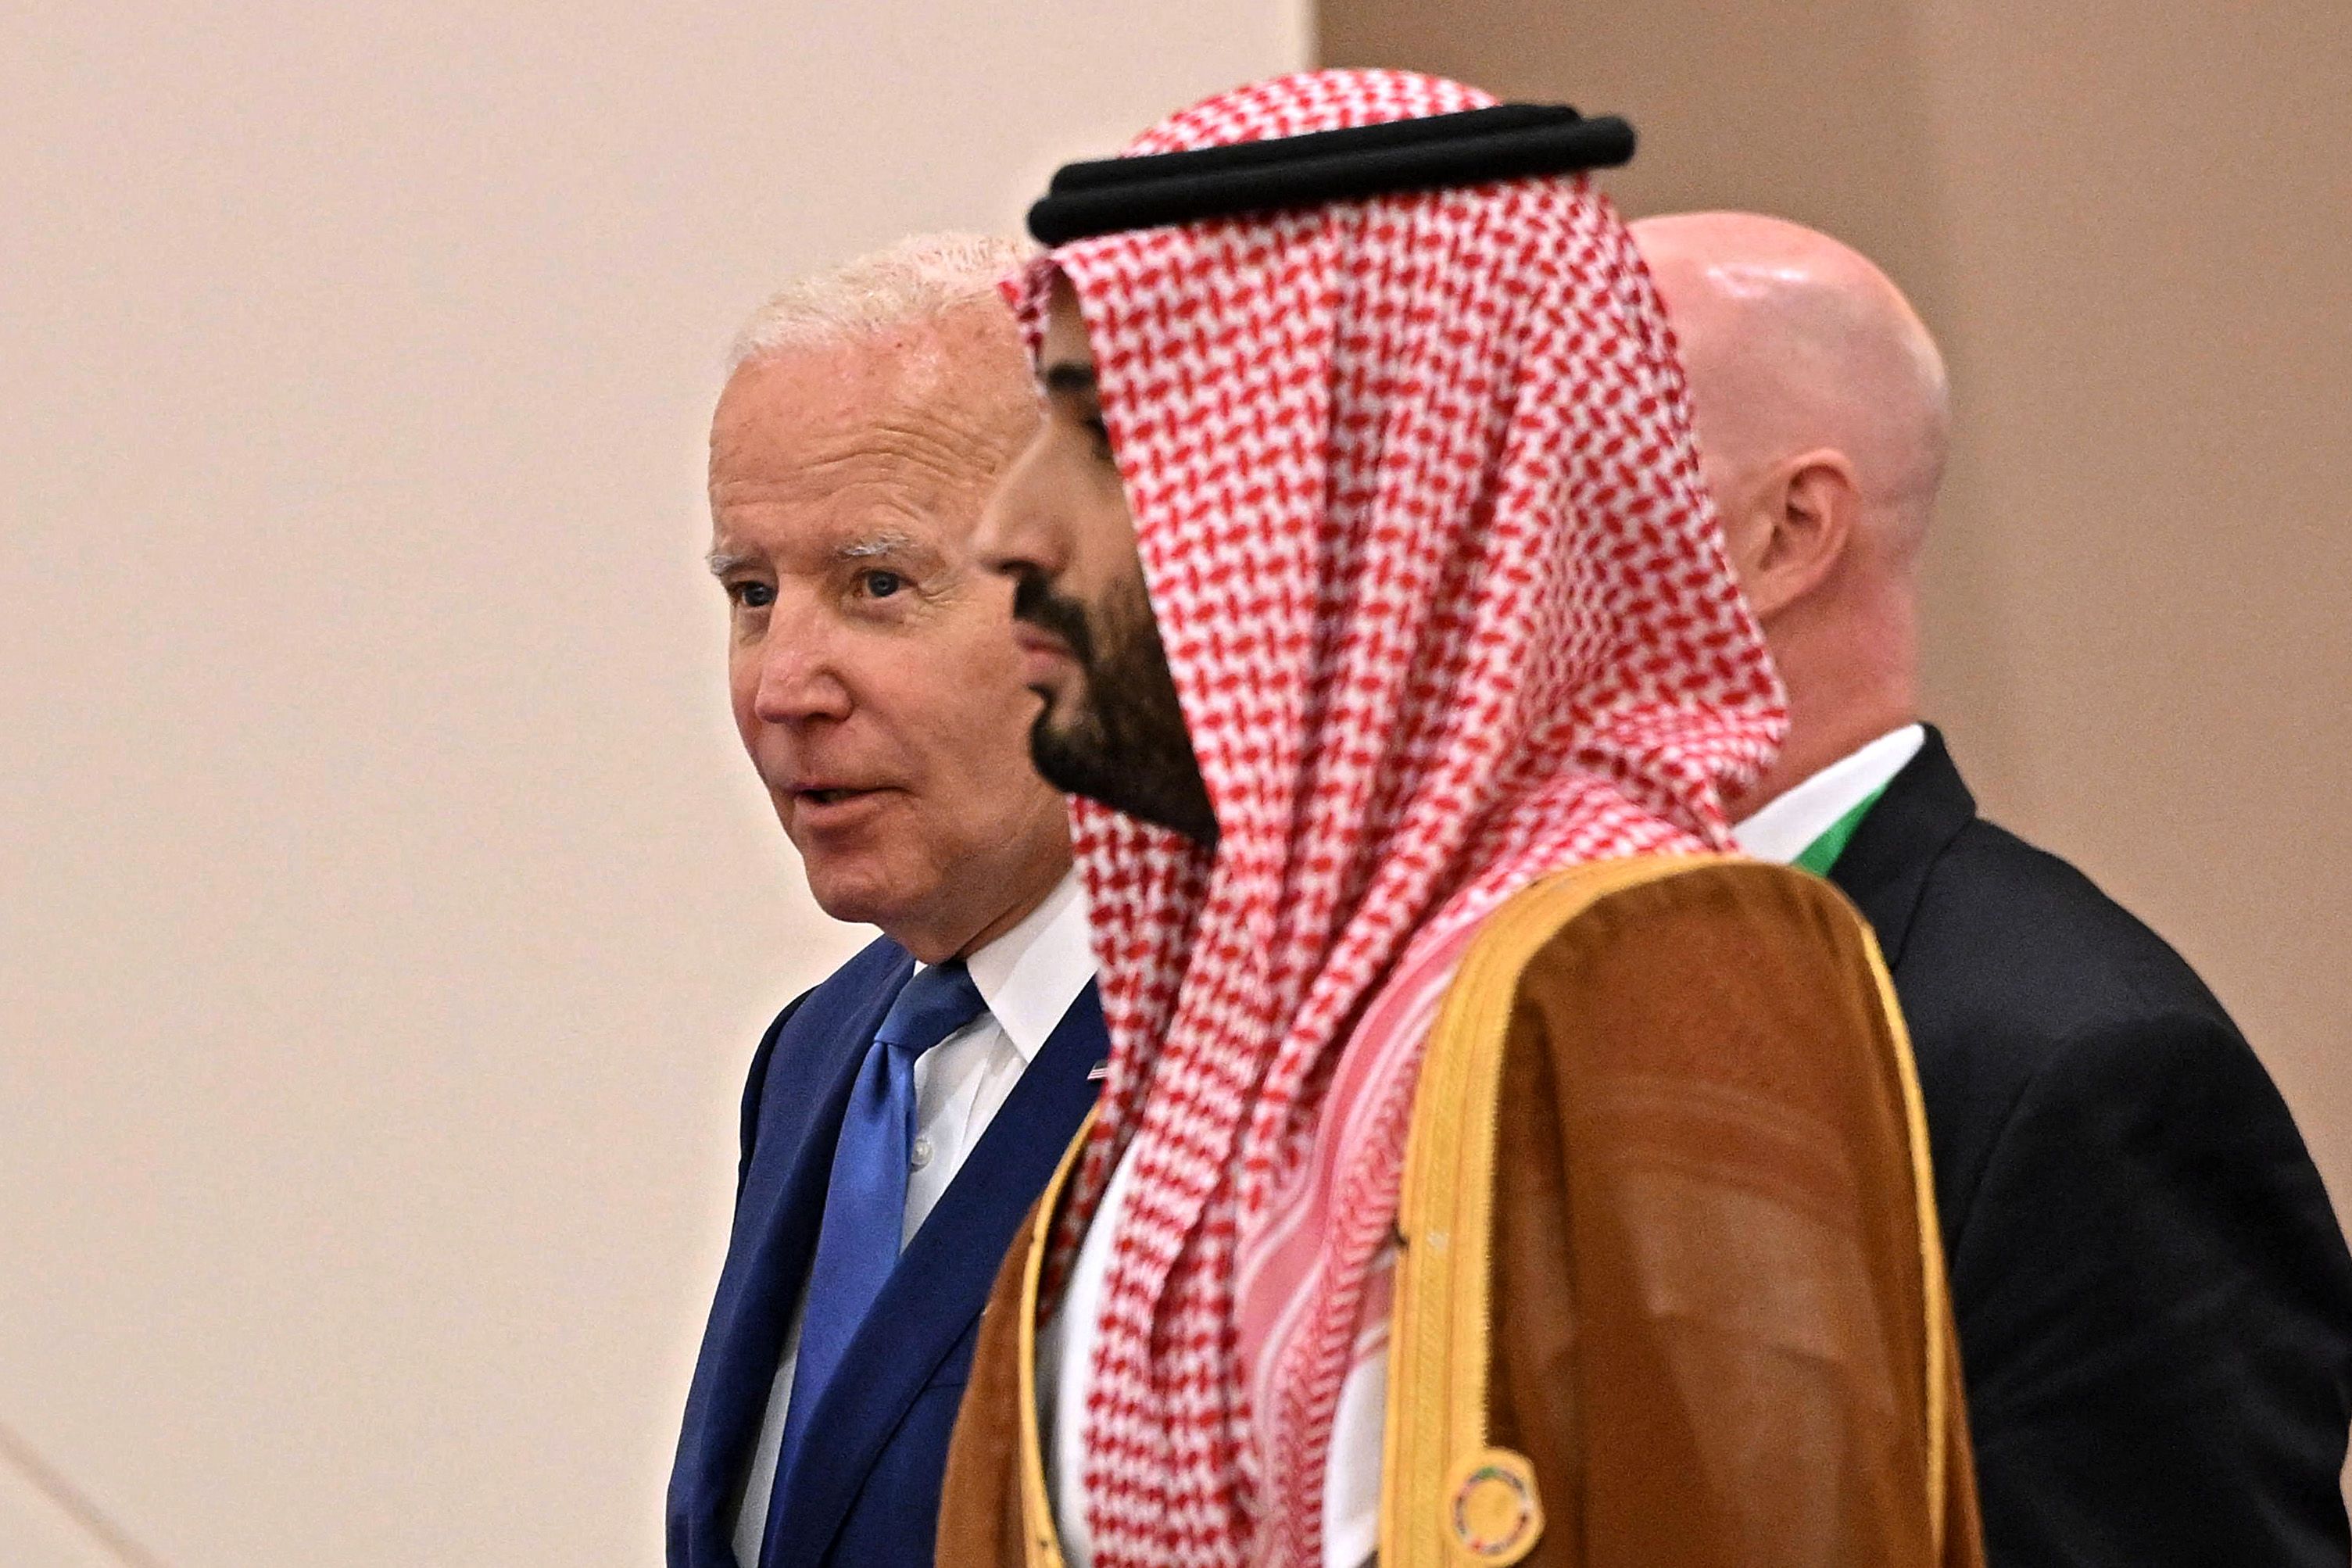 Biden walking behind Crown Prince Mohammed bin Salman as the two enter a room.